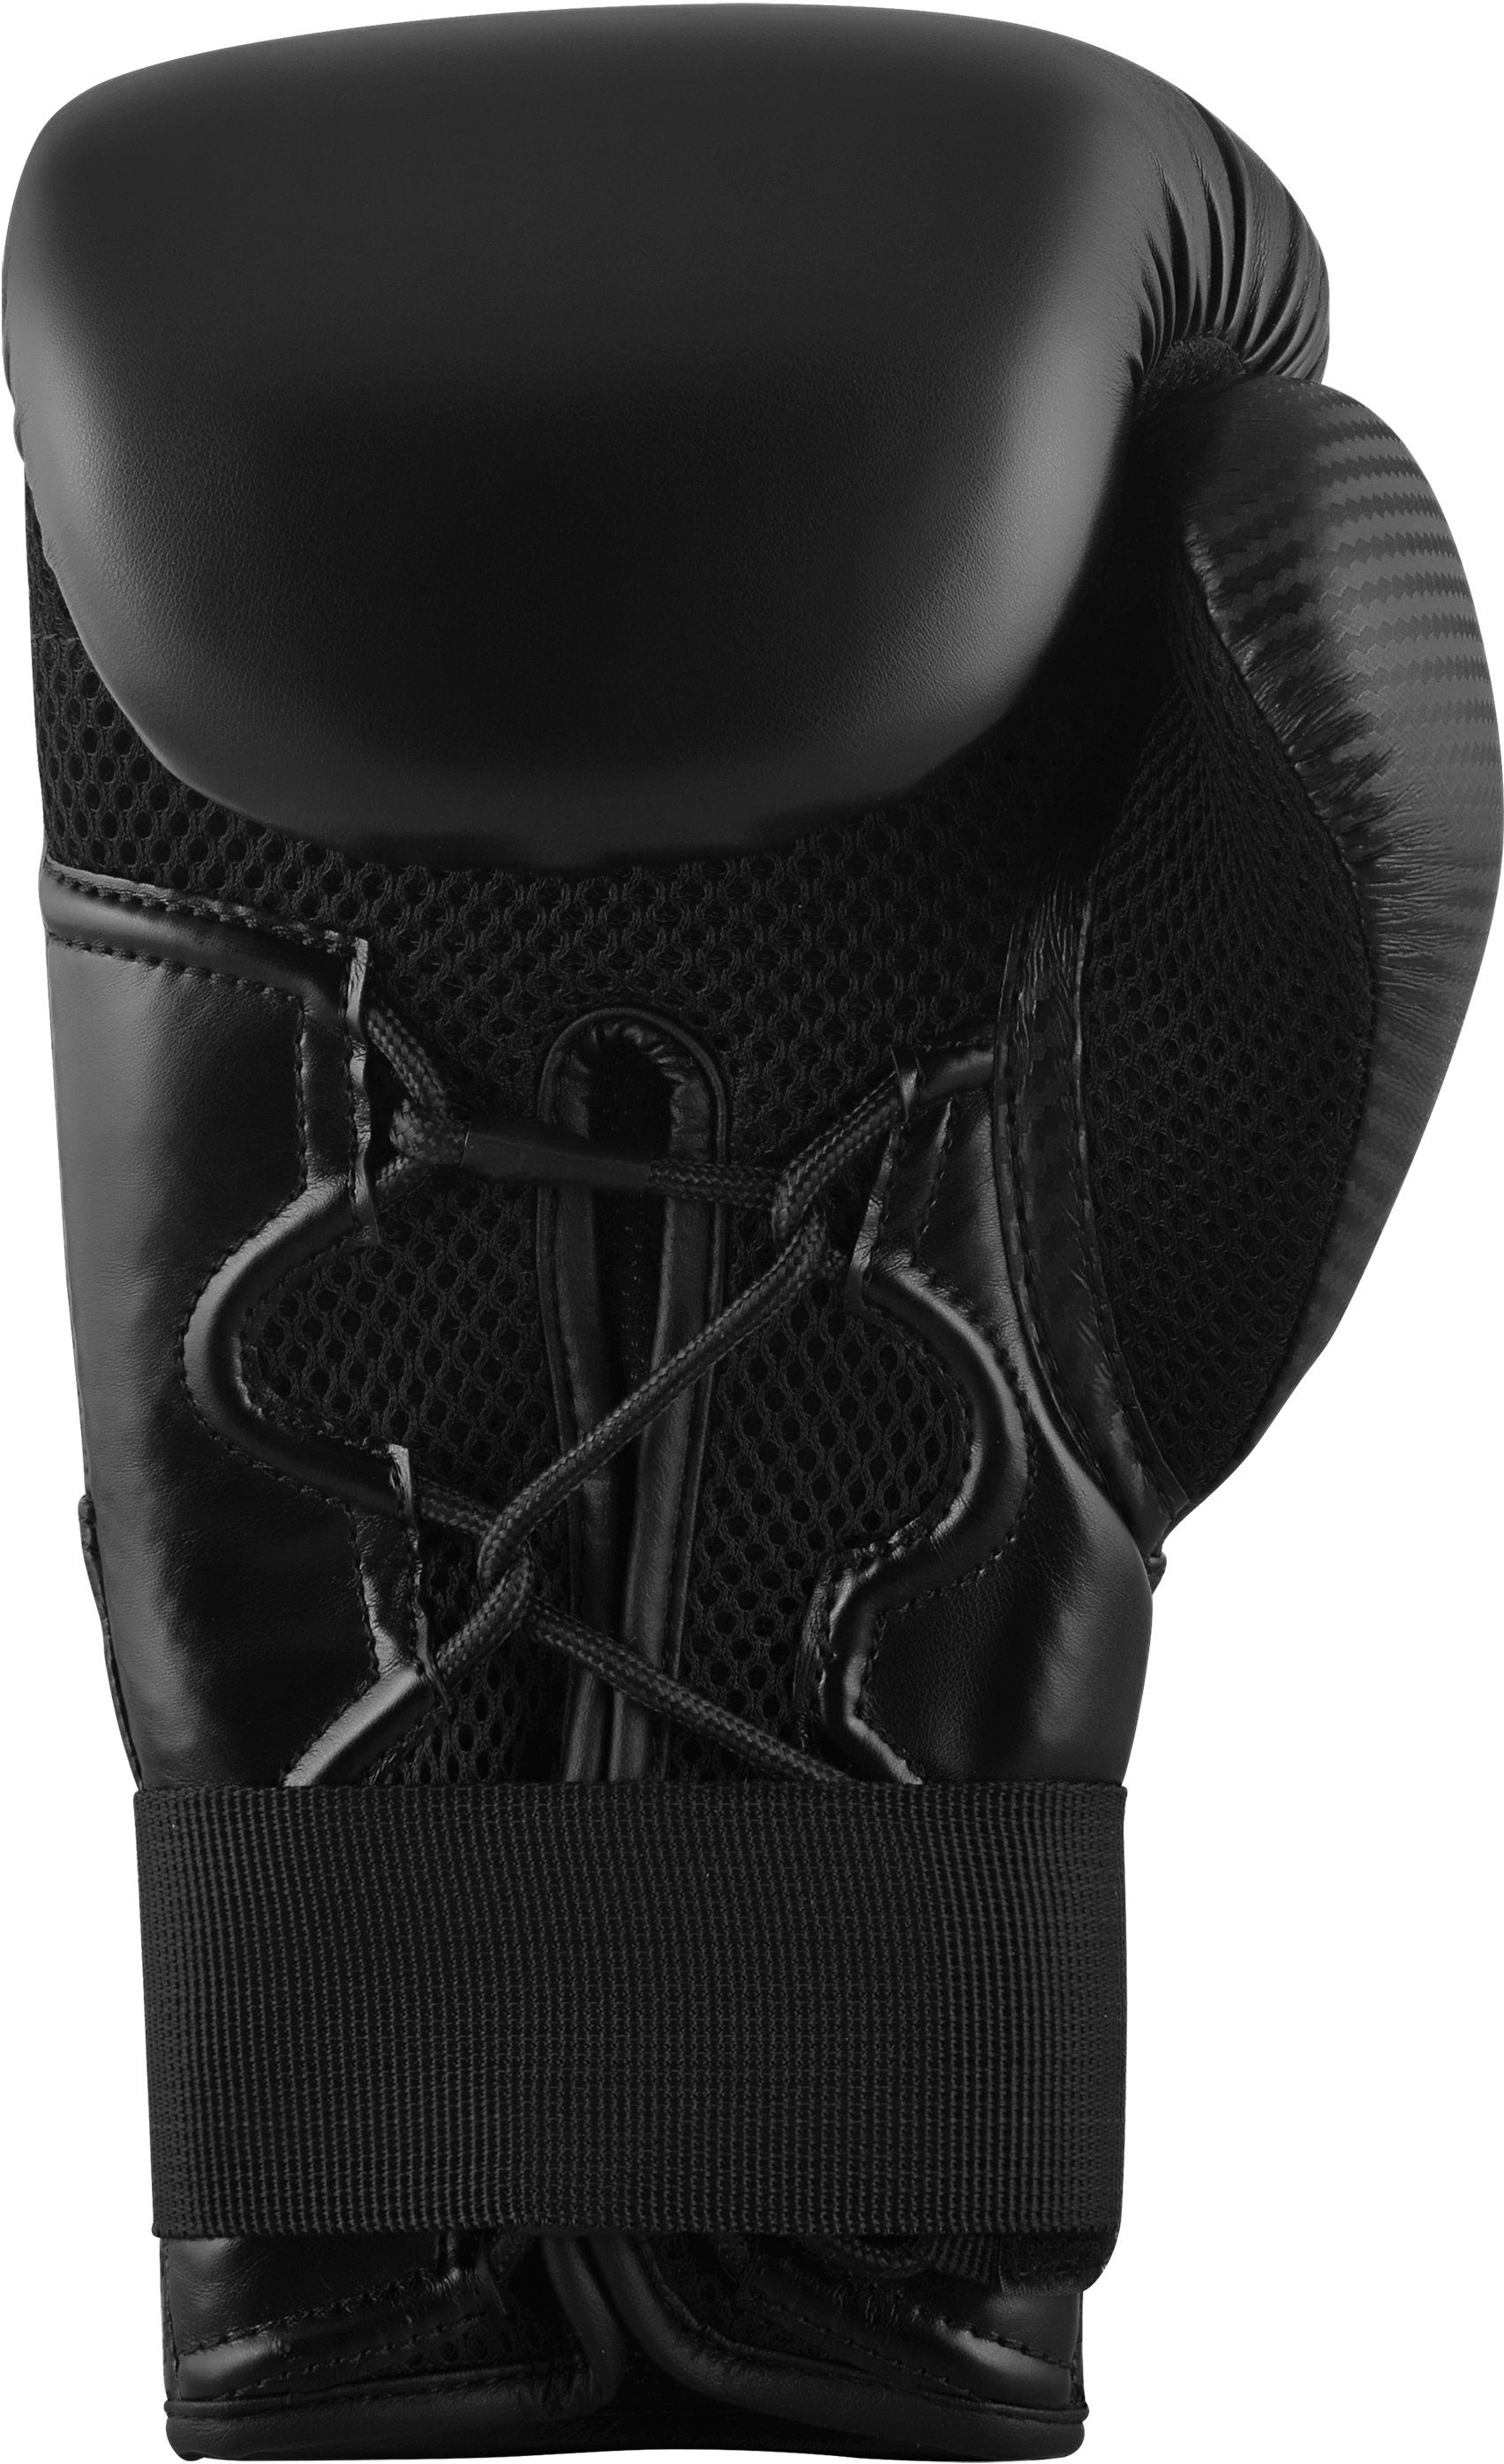 Performance adidas Boxhandschuhe schwarz